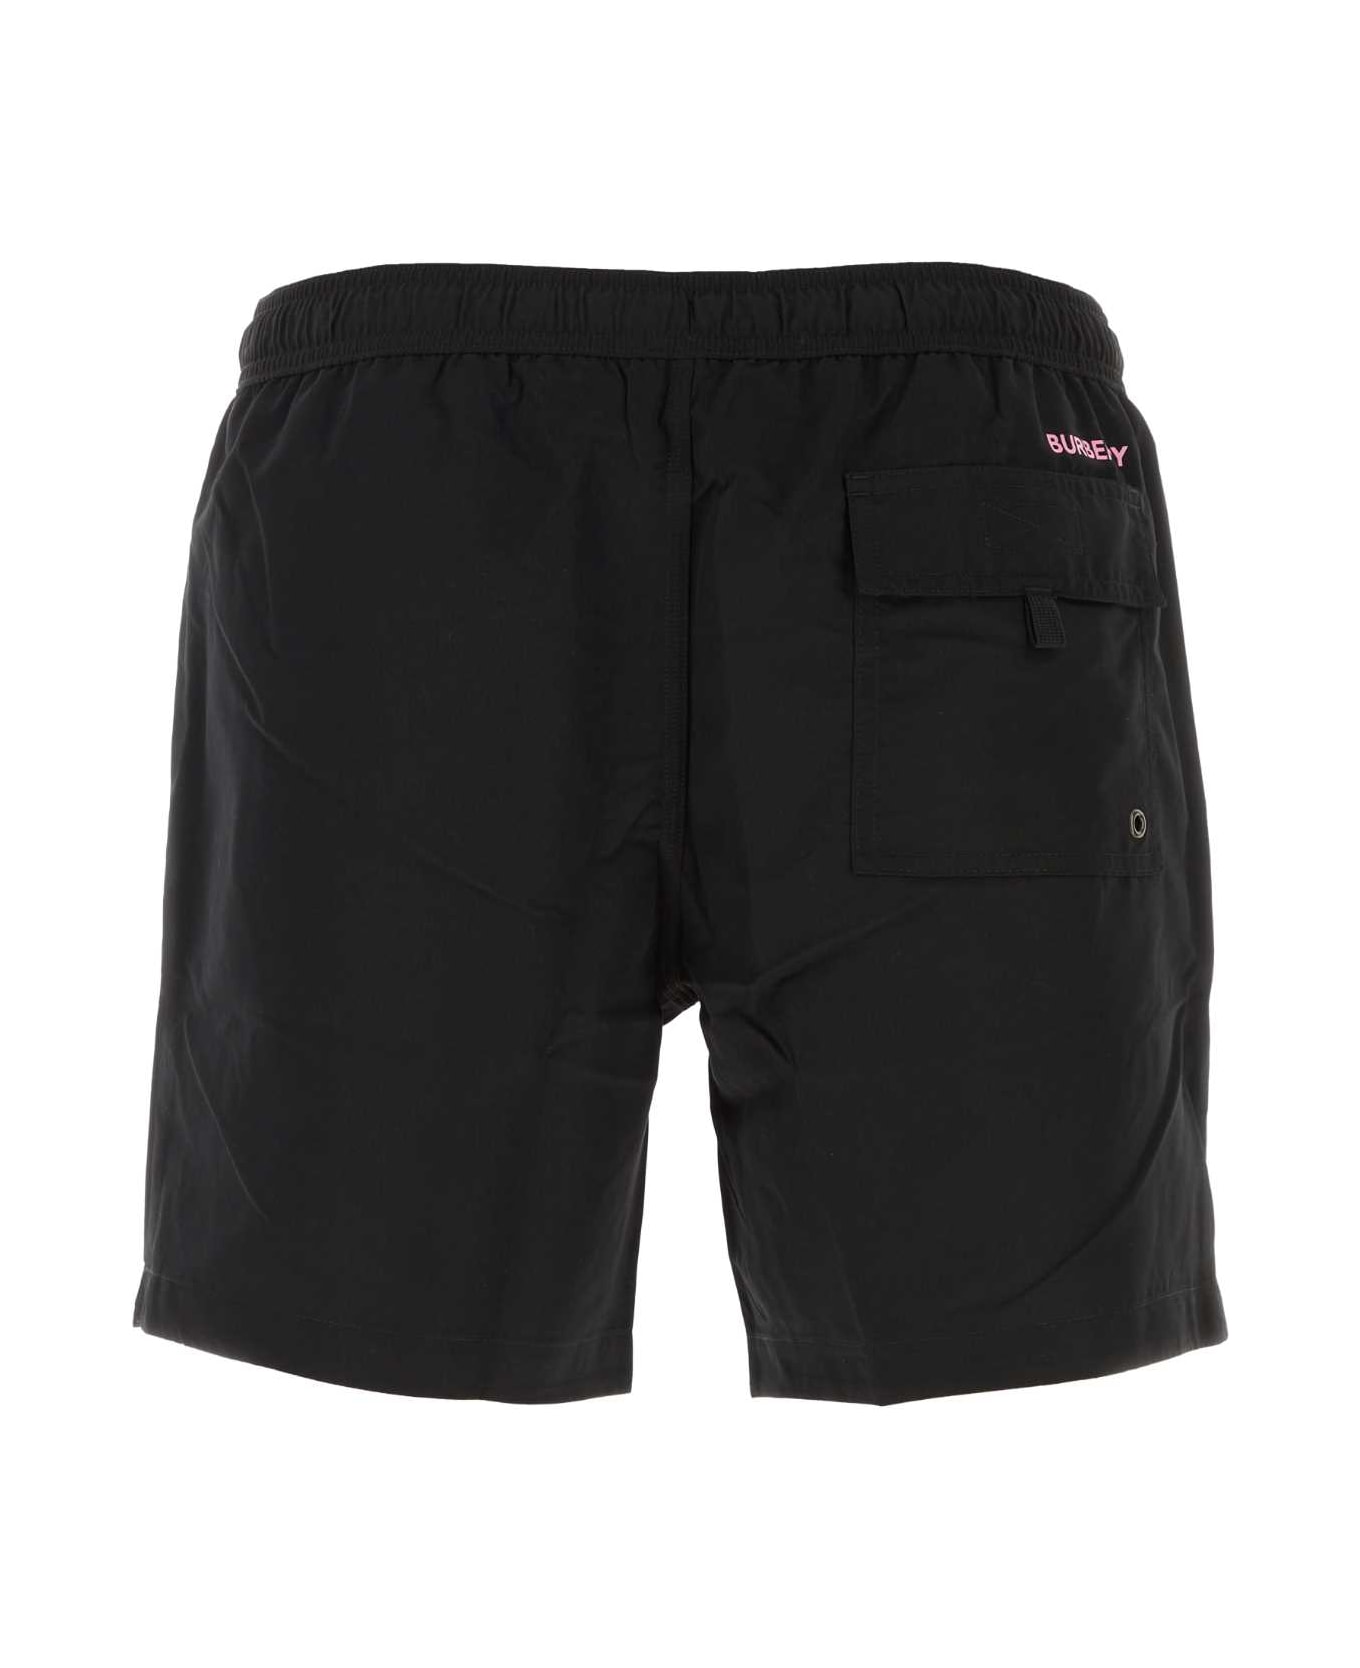 Burberry Black Polyester Swimming Shorts - BLACK